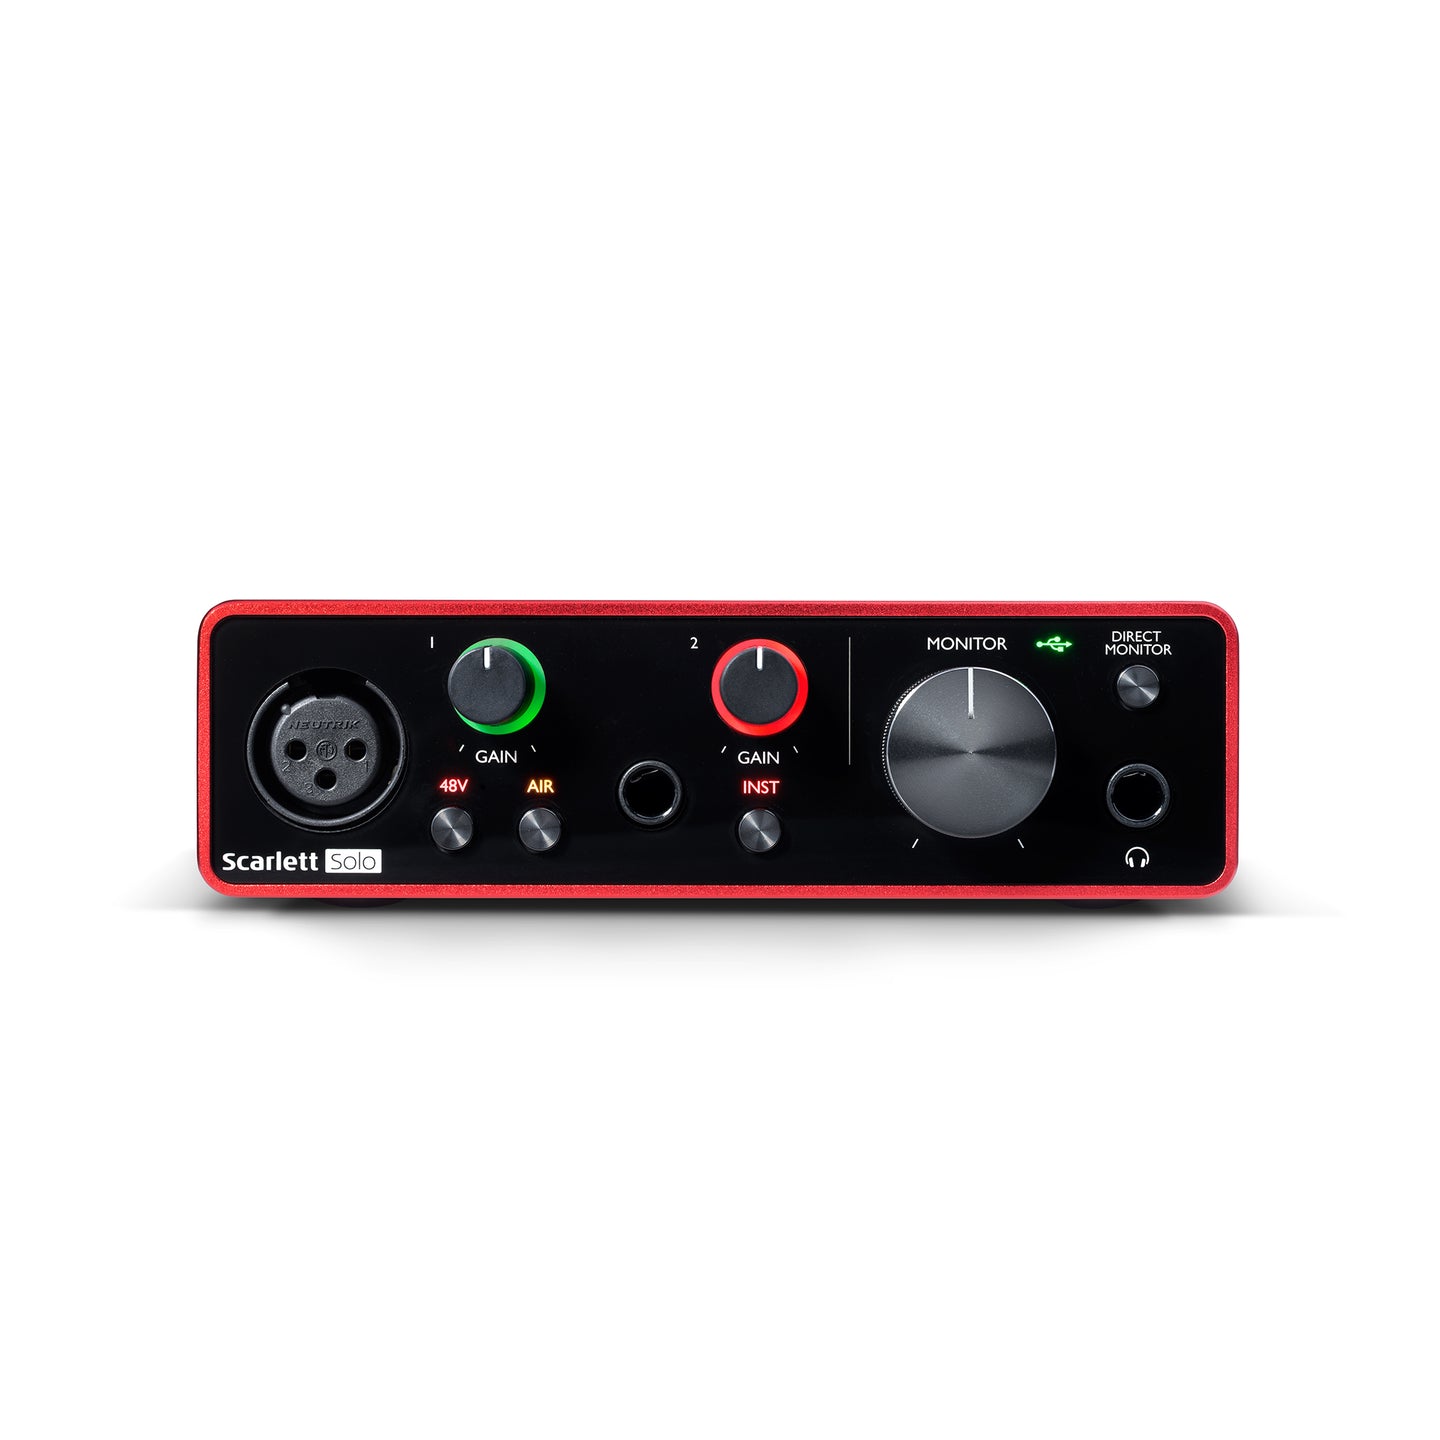 Focusrite Scarlett 2i2 2nd Gen USB Audio Interface